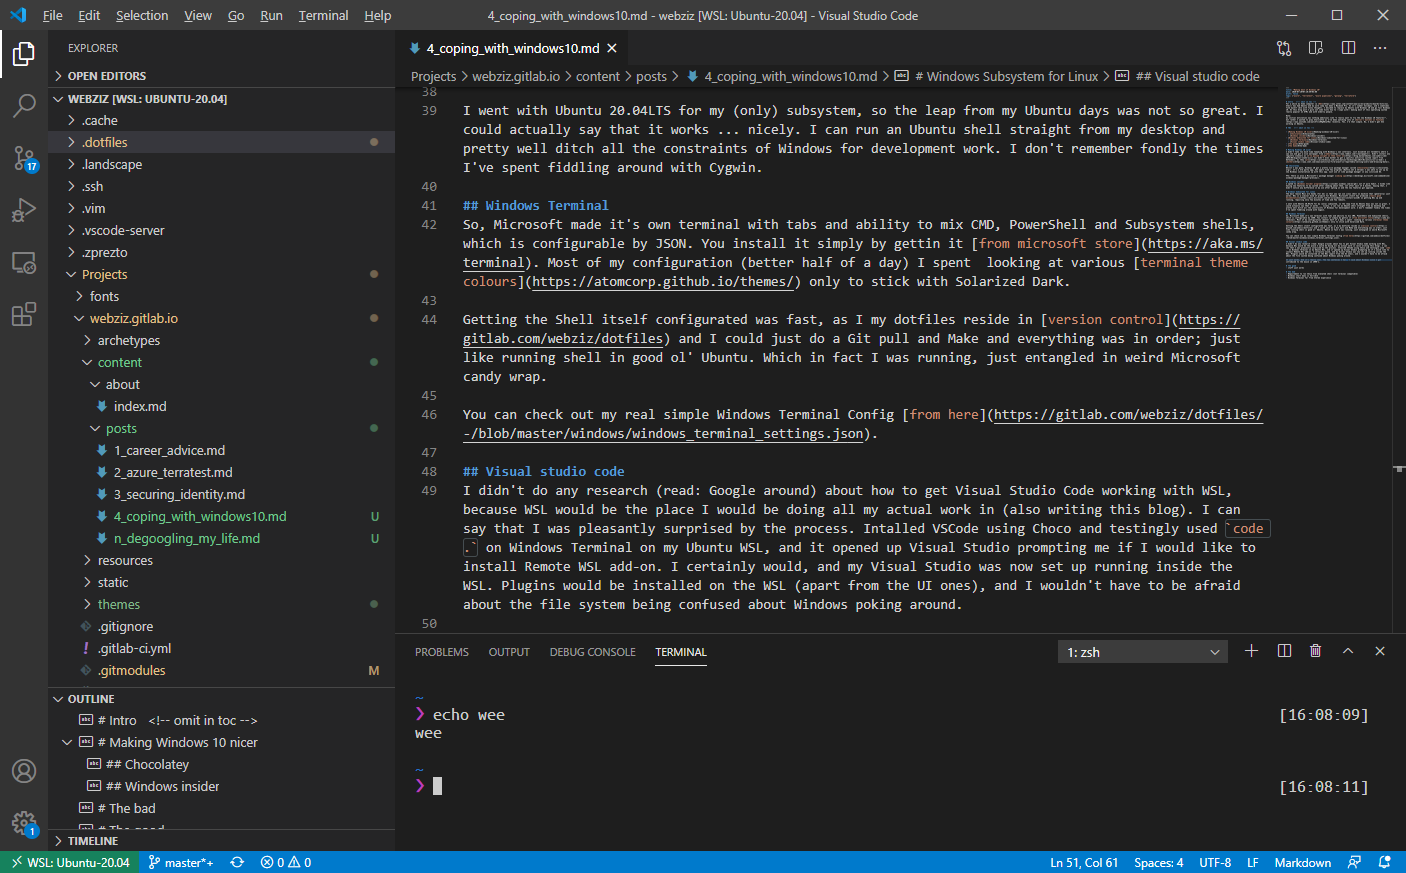 Doing the blogging inside WSL on Visual Studio Code